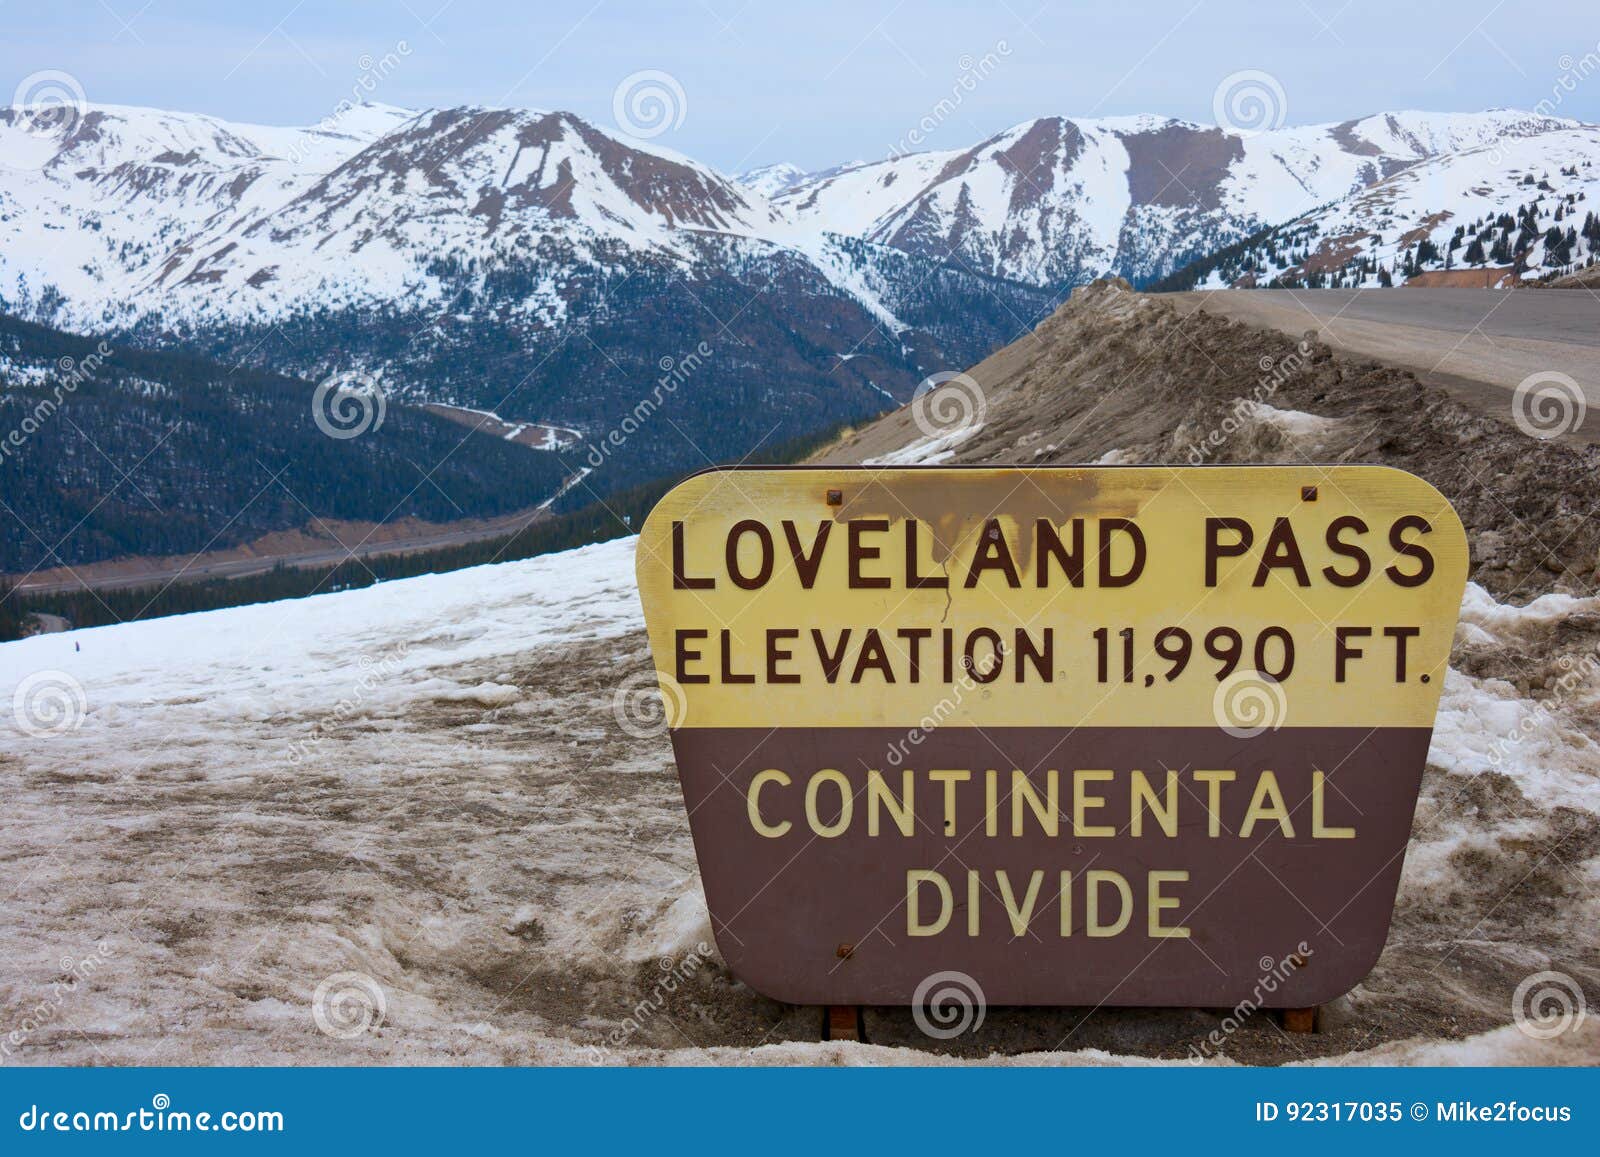 loveland pass continental divide in colorado rocky mountains